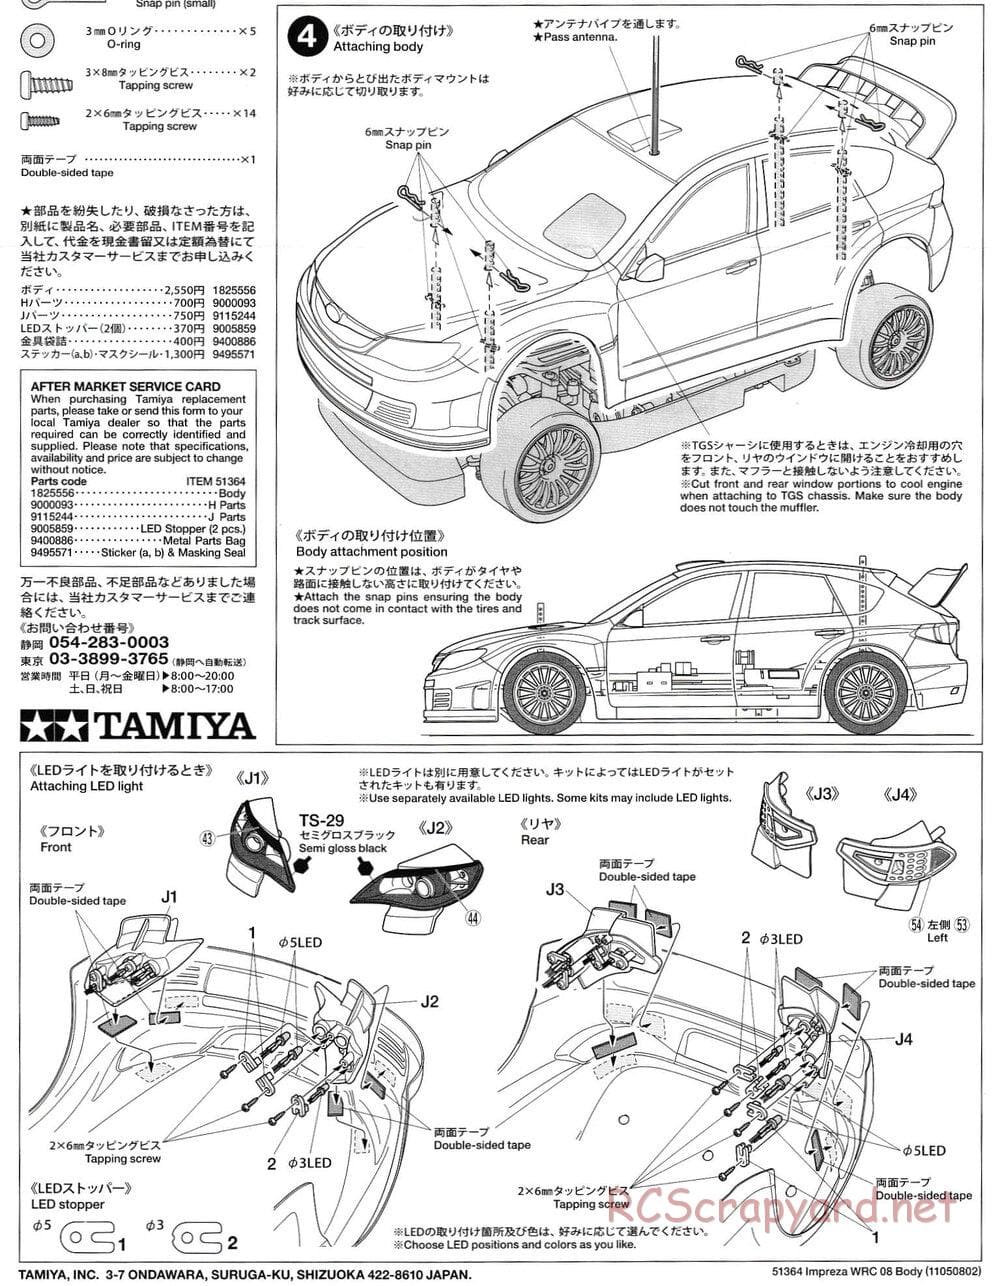 Tamiya - Subaru Impreza WRC 2008 - DF-03Ra Chassis - Body Manual - Page 4